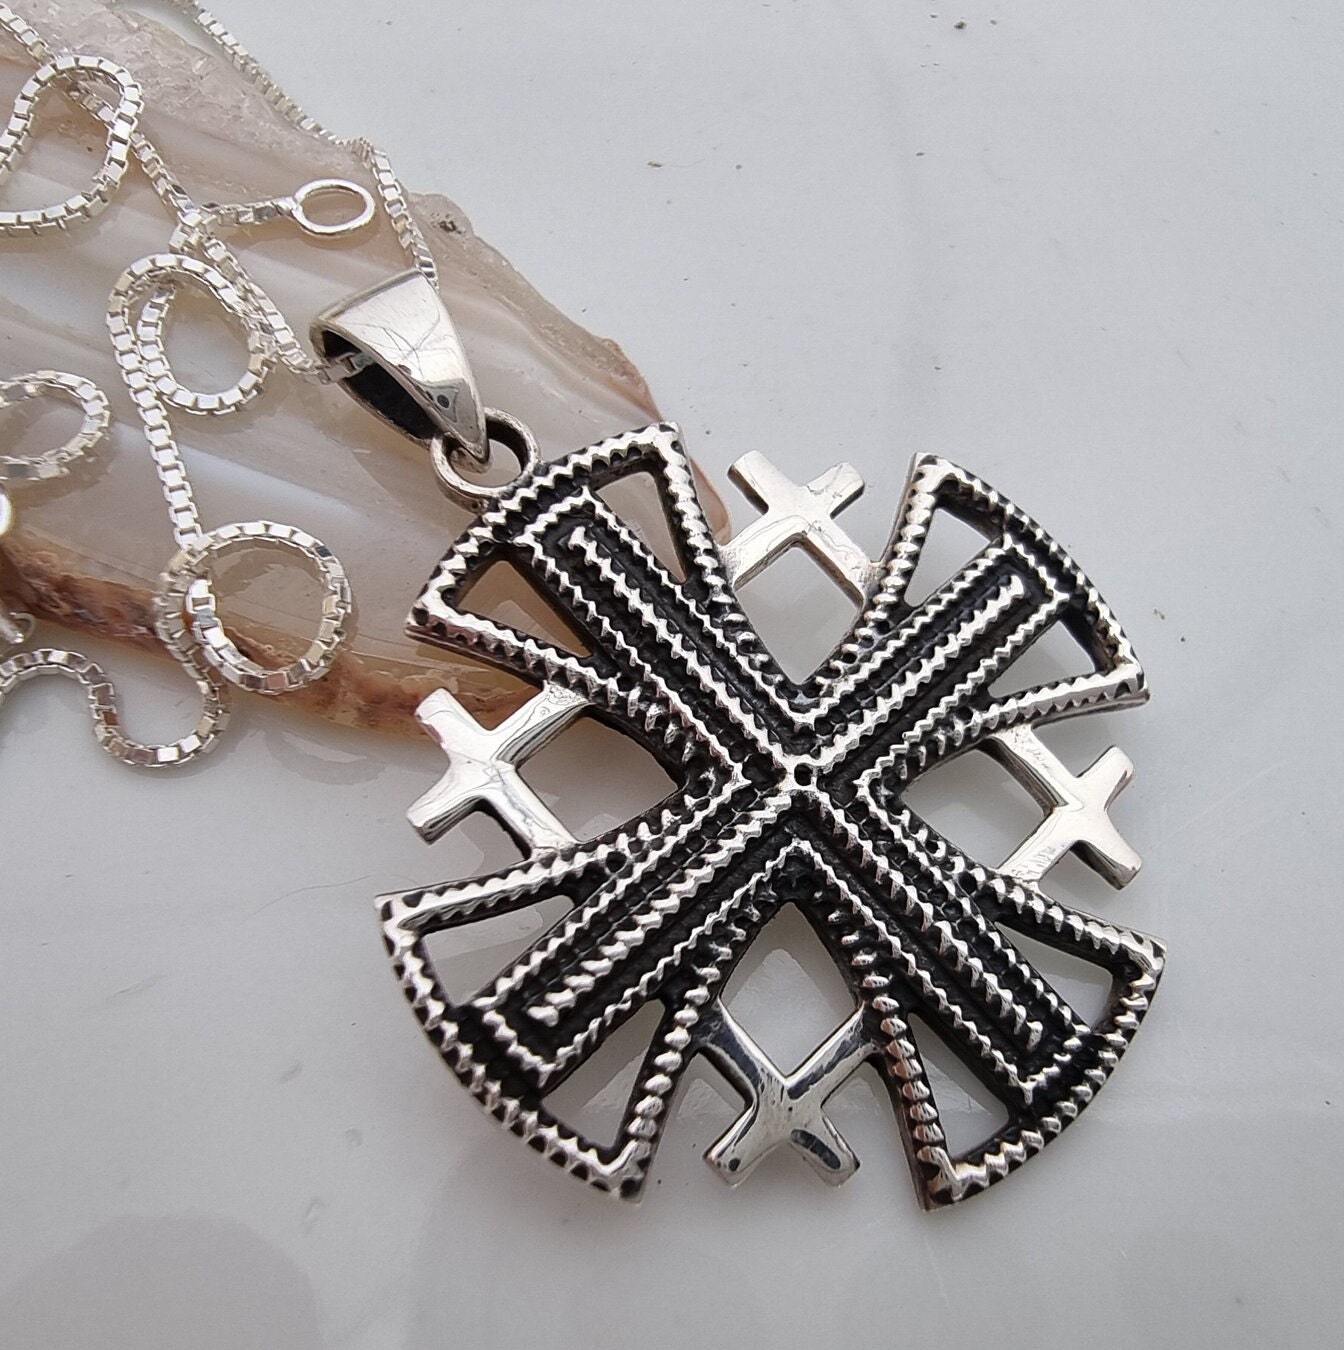 925 Sterling Silver Jerusalem Cross Fivefold Cross Crusaders Cross Emblem Medal Pendant Necklace A12